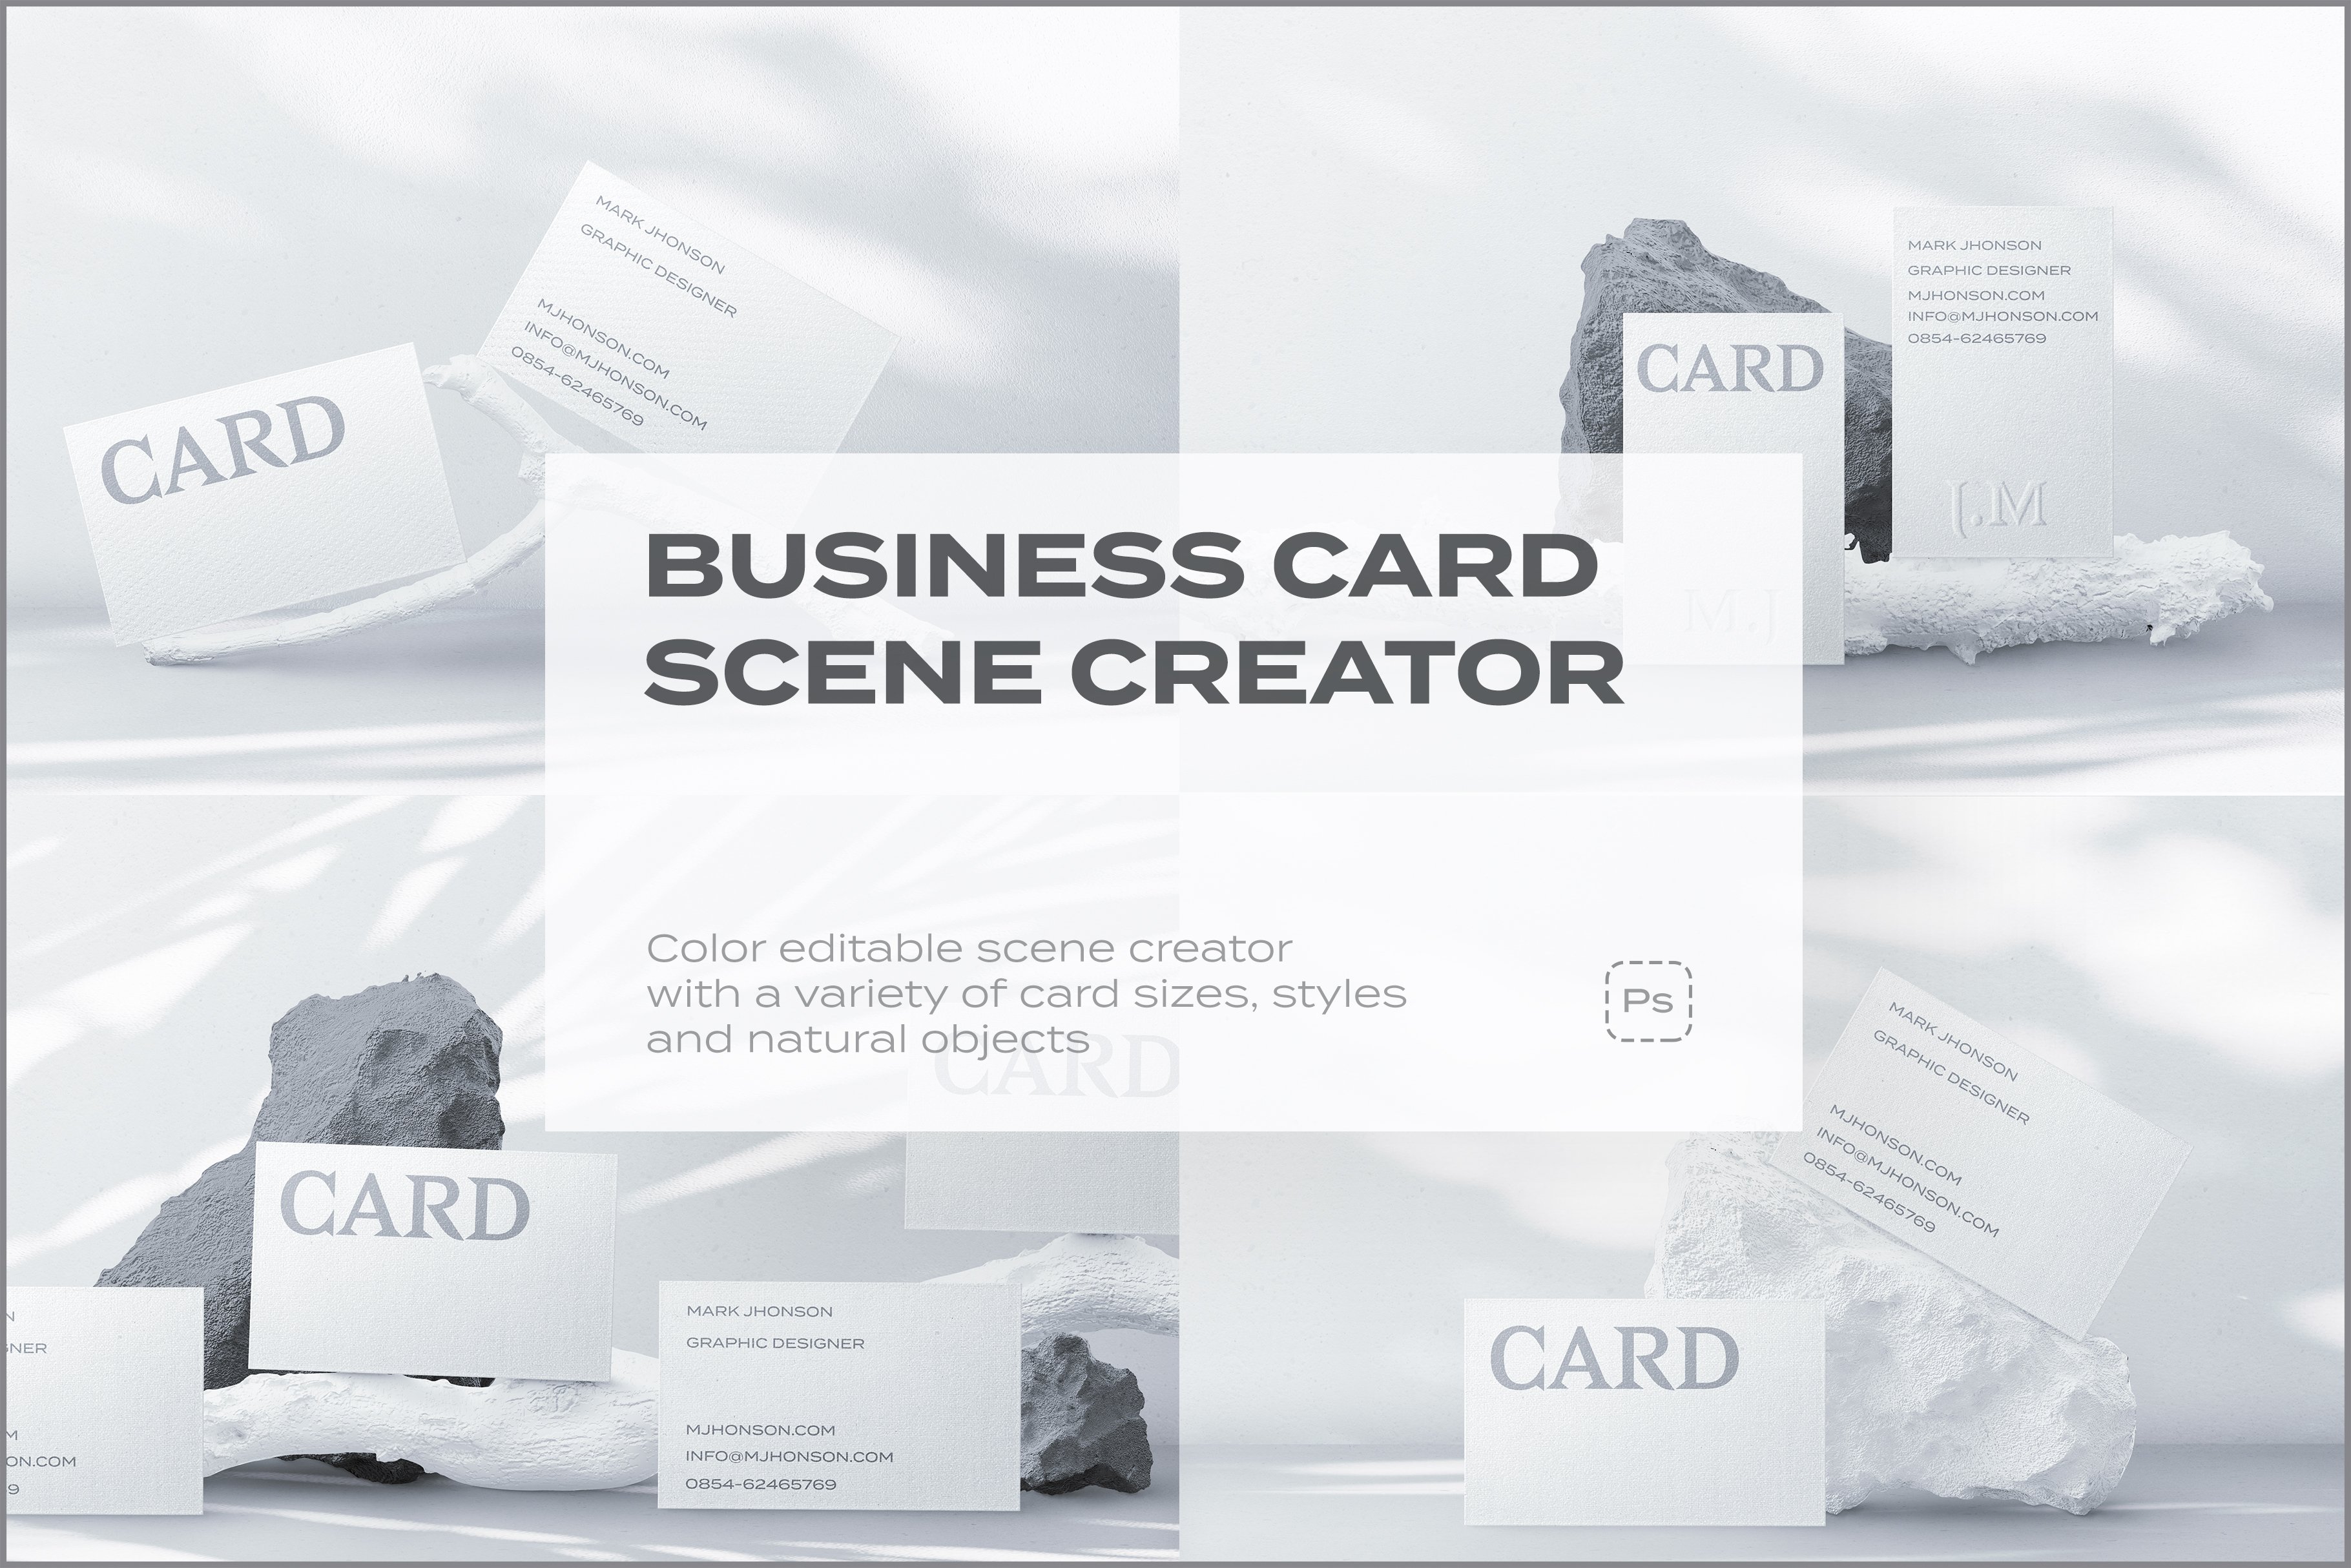 Minimal Business Card Scene Creator cover image.